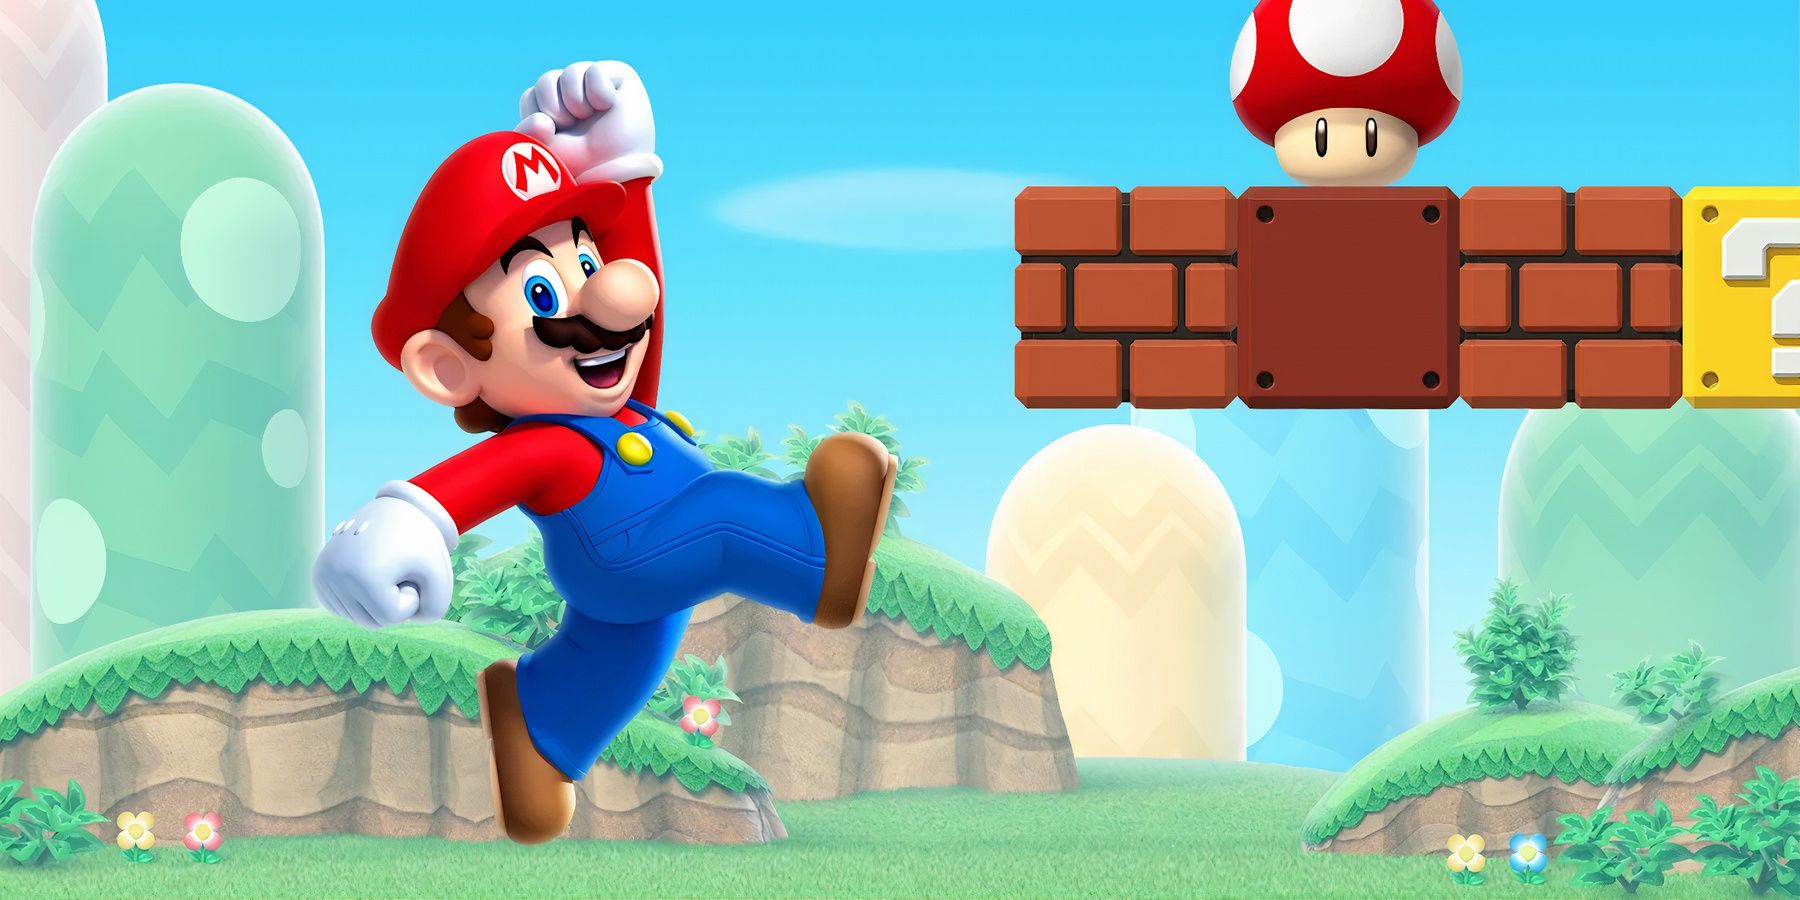 Mario jumping with blocks and a mushroom ahead